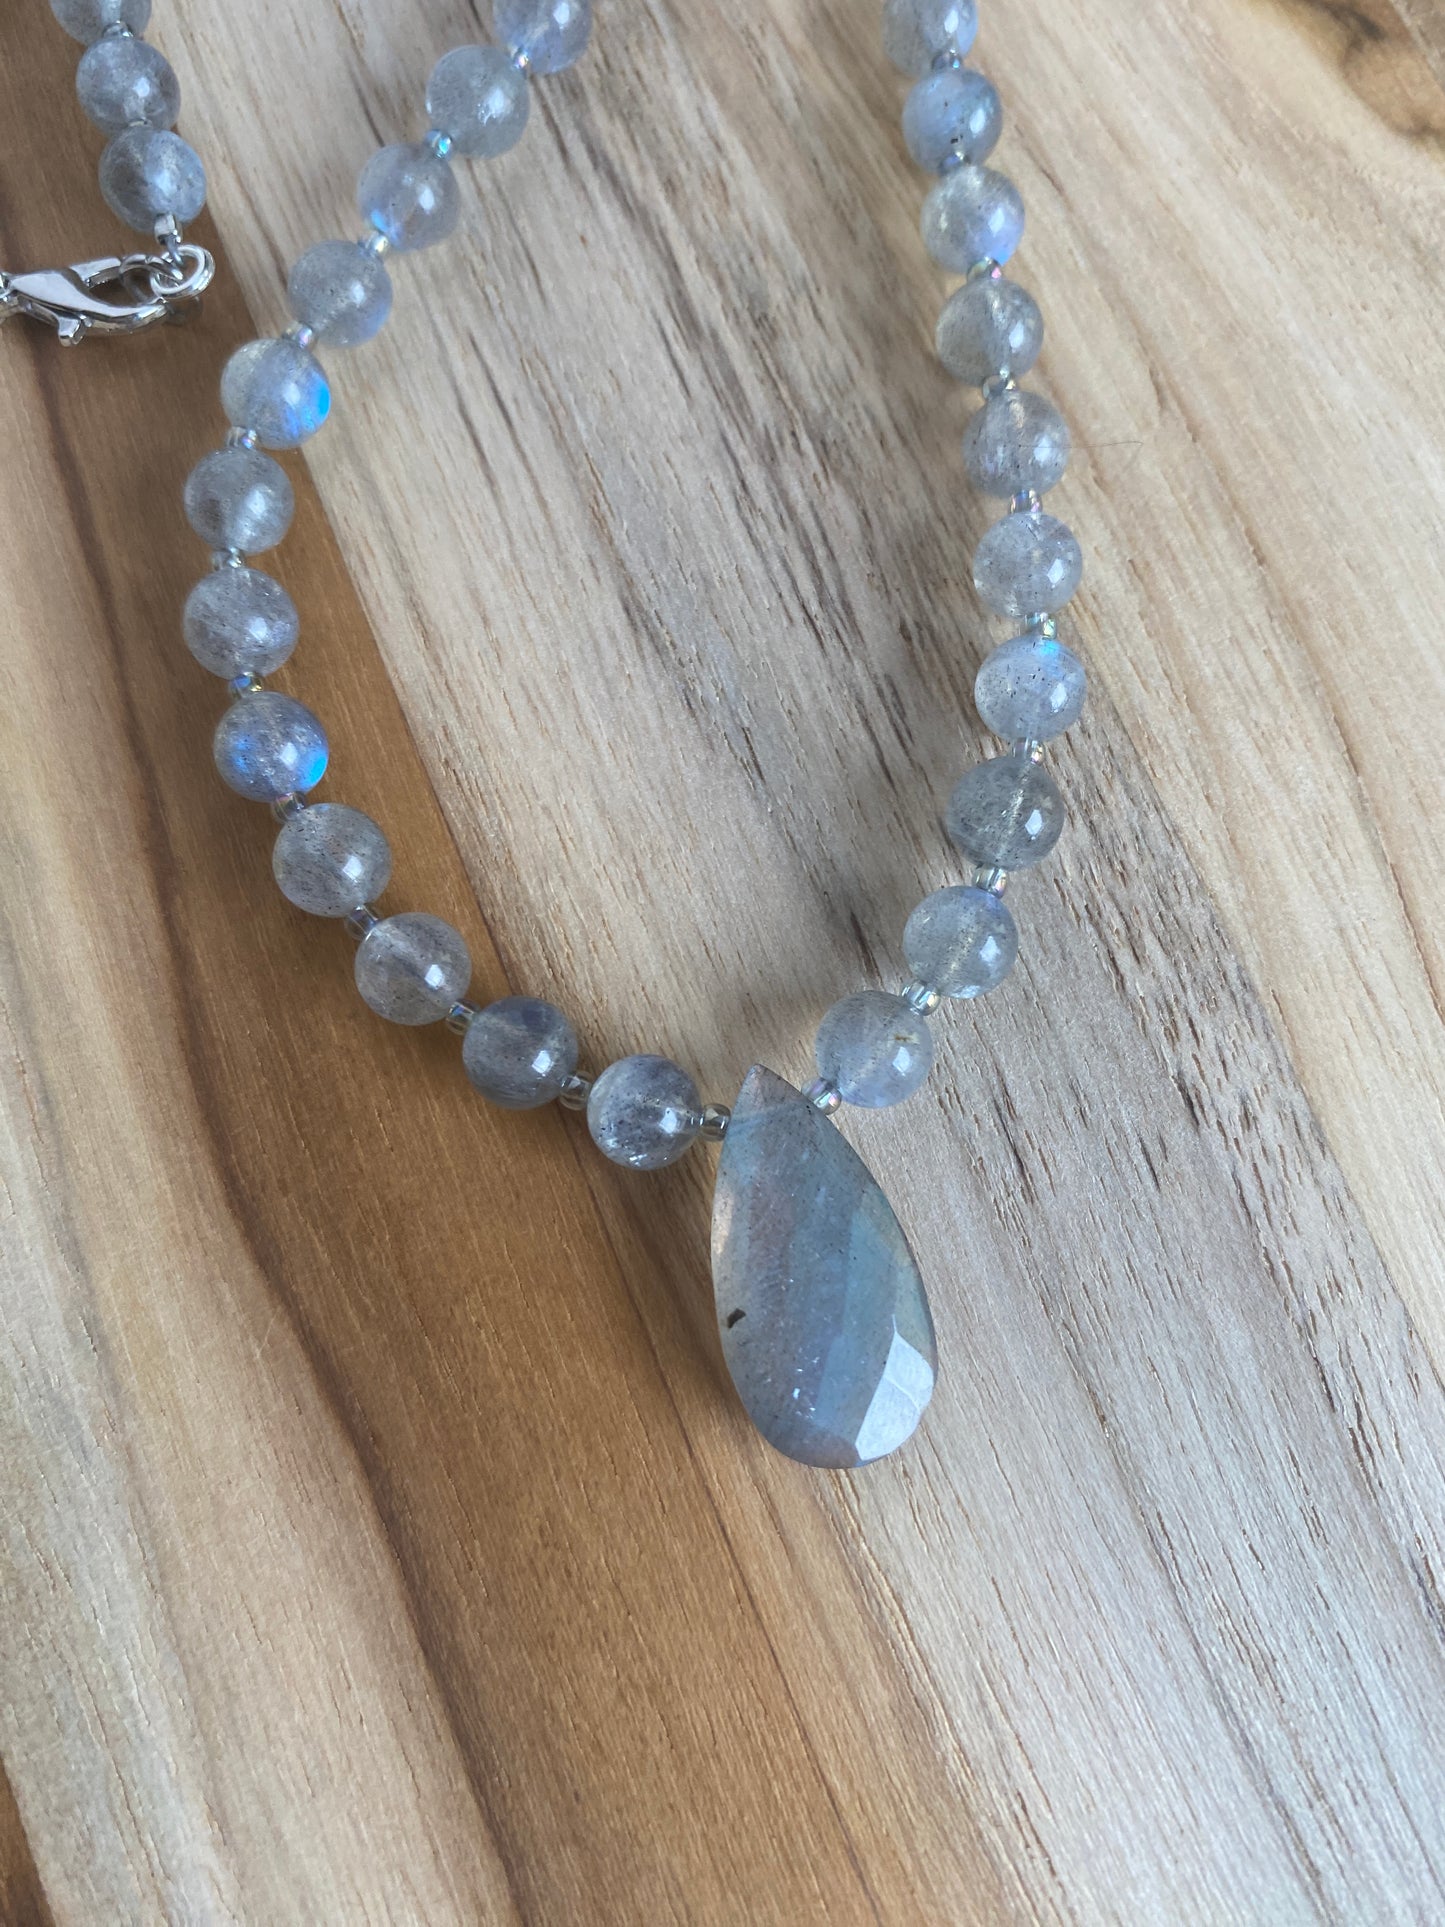 Labradorite Pendant Necklace with Labradorite Beads